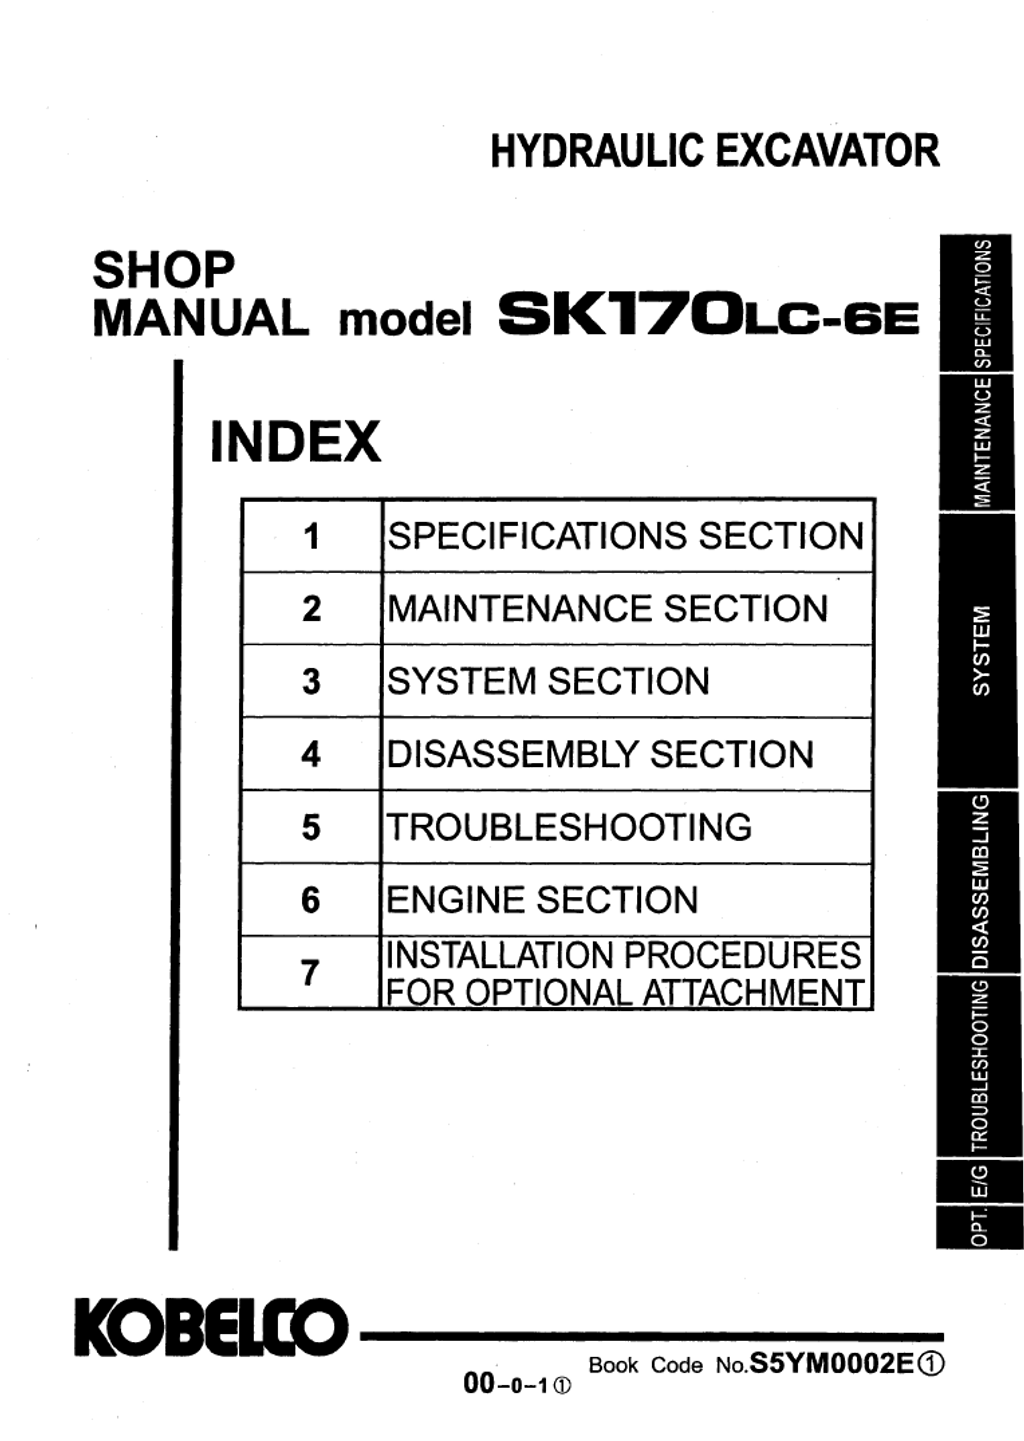 EPC17-Kobelco Shop Manual_11